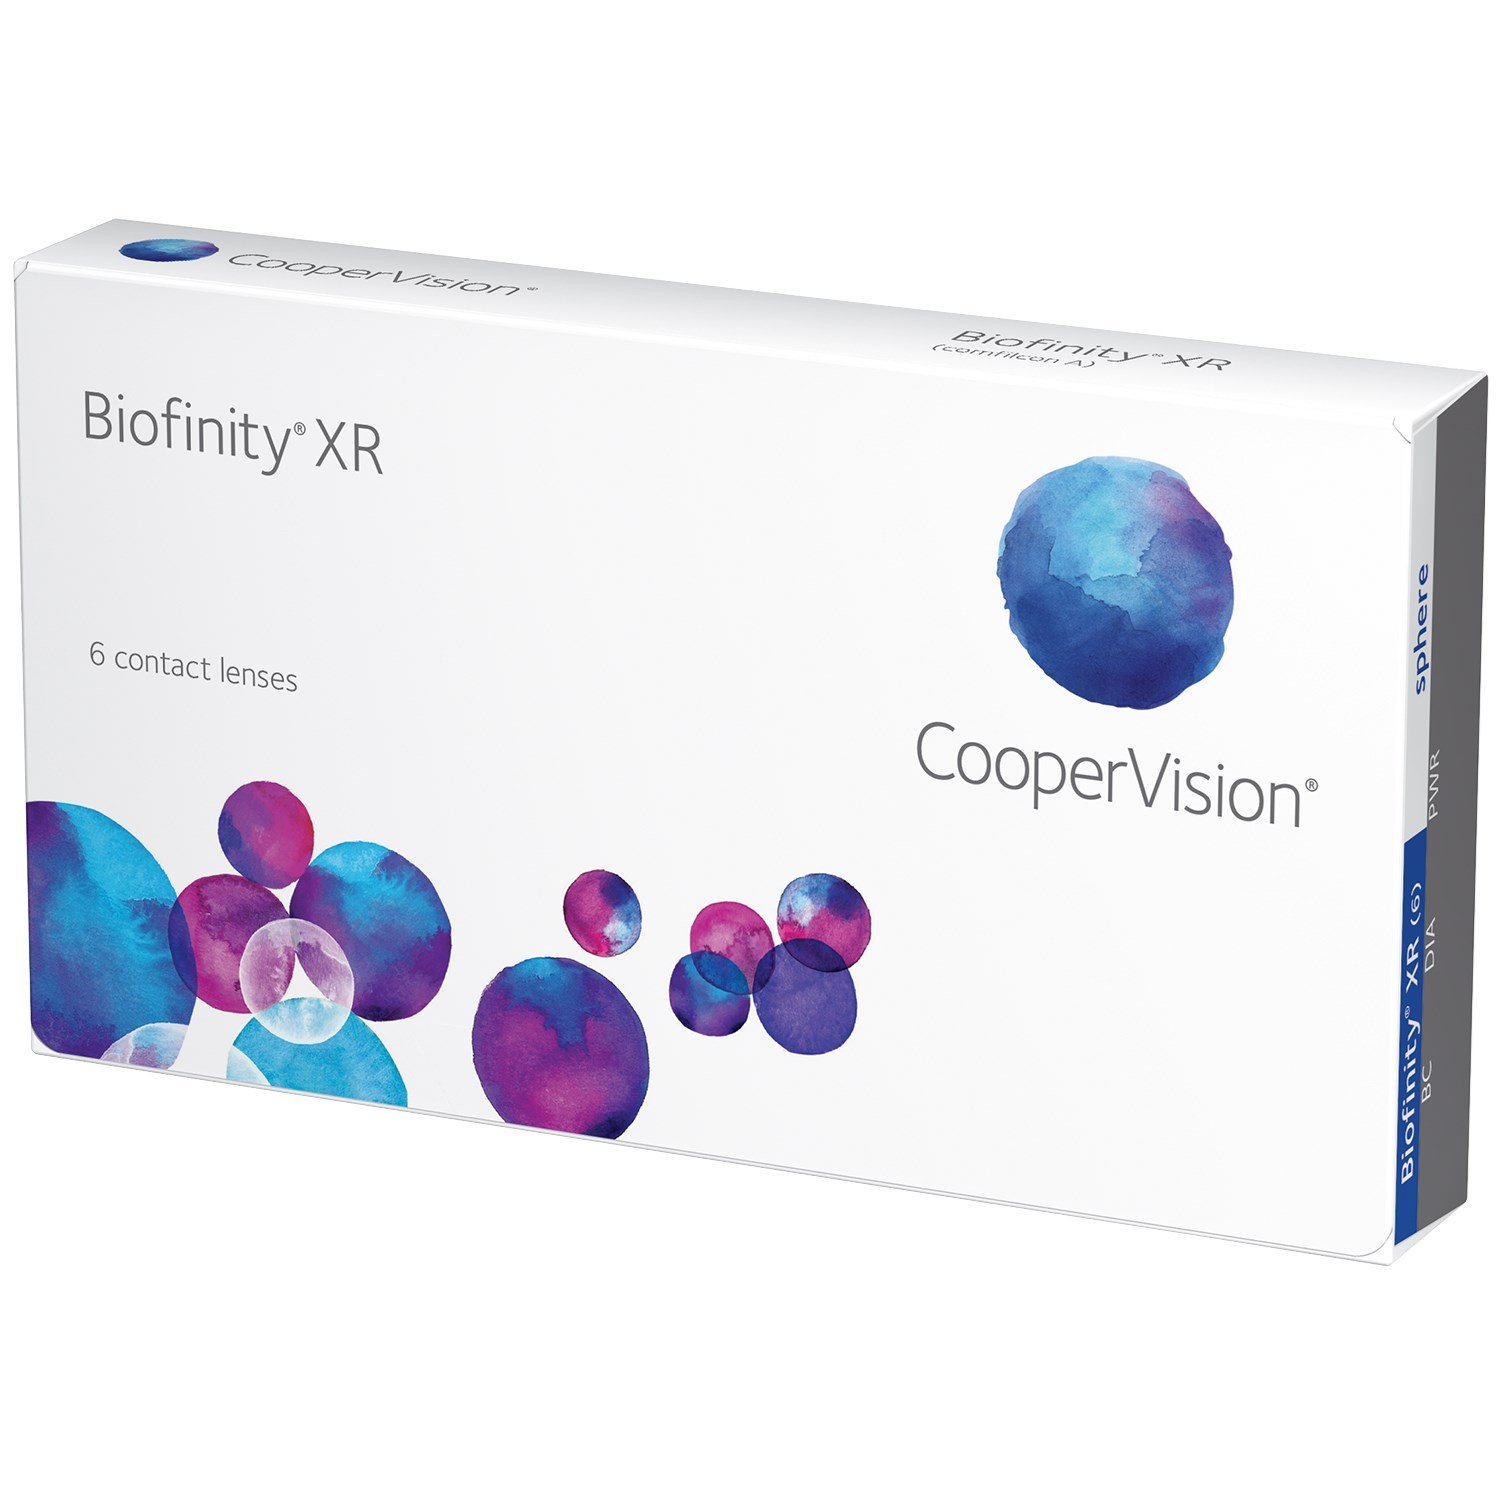 Biofinity XR contact lenses